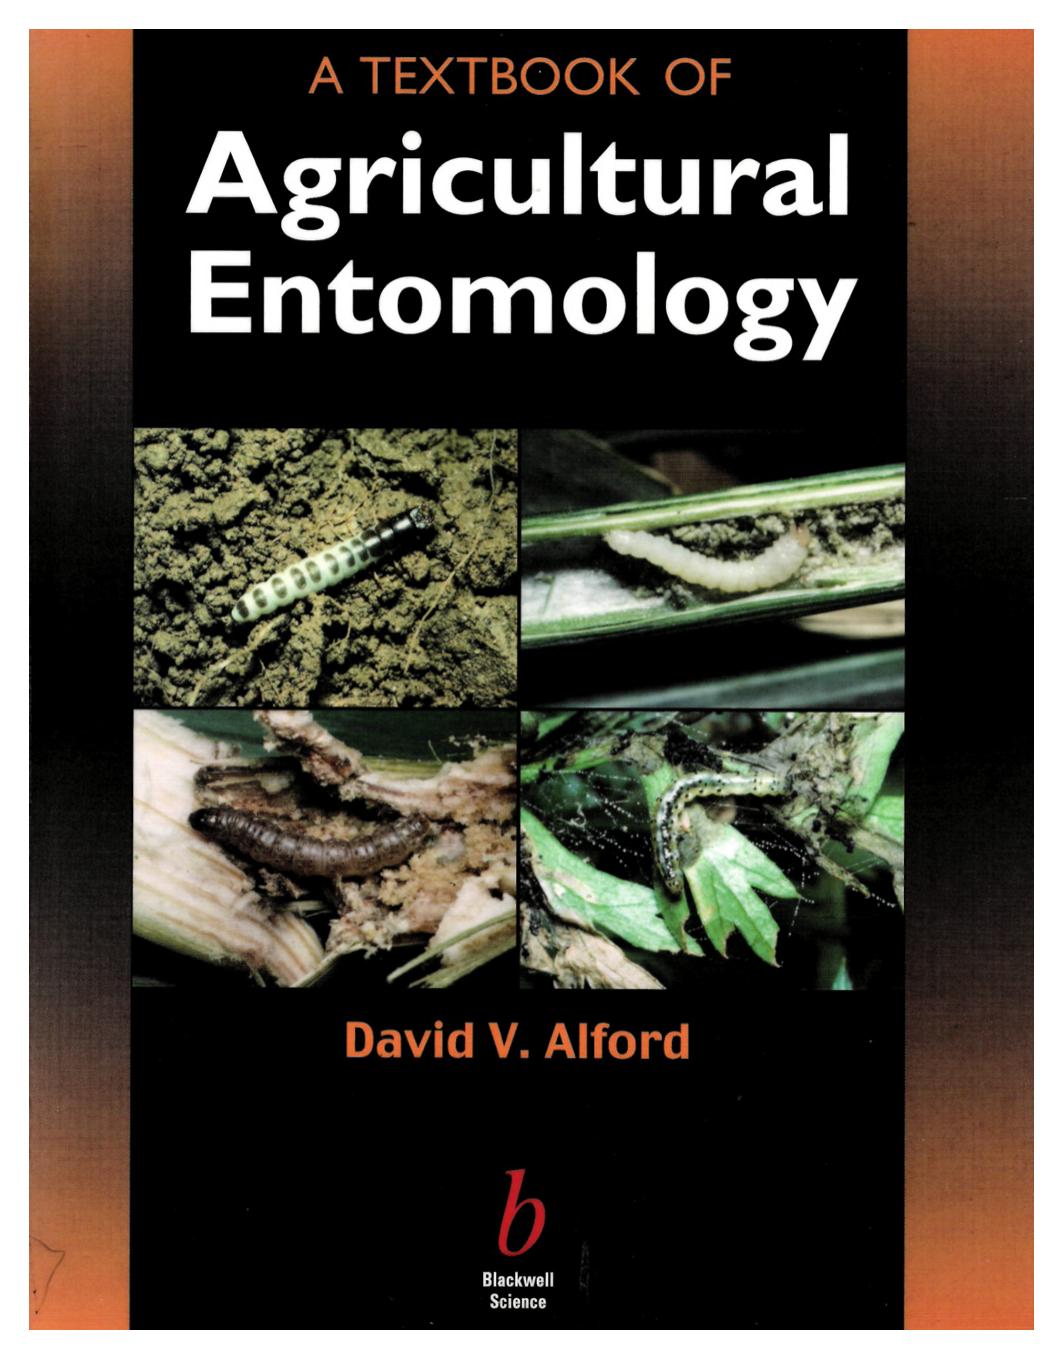 A Textbook of Agricultural Entomology by David V. Alford (z-lib.org) 1999